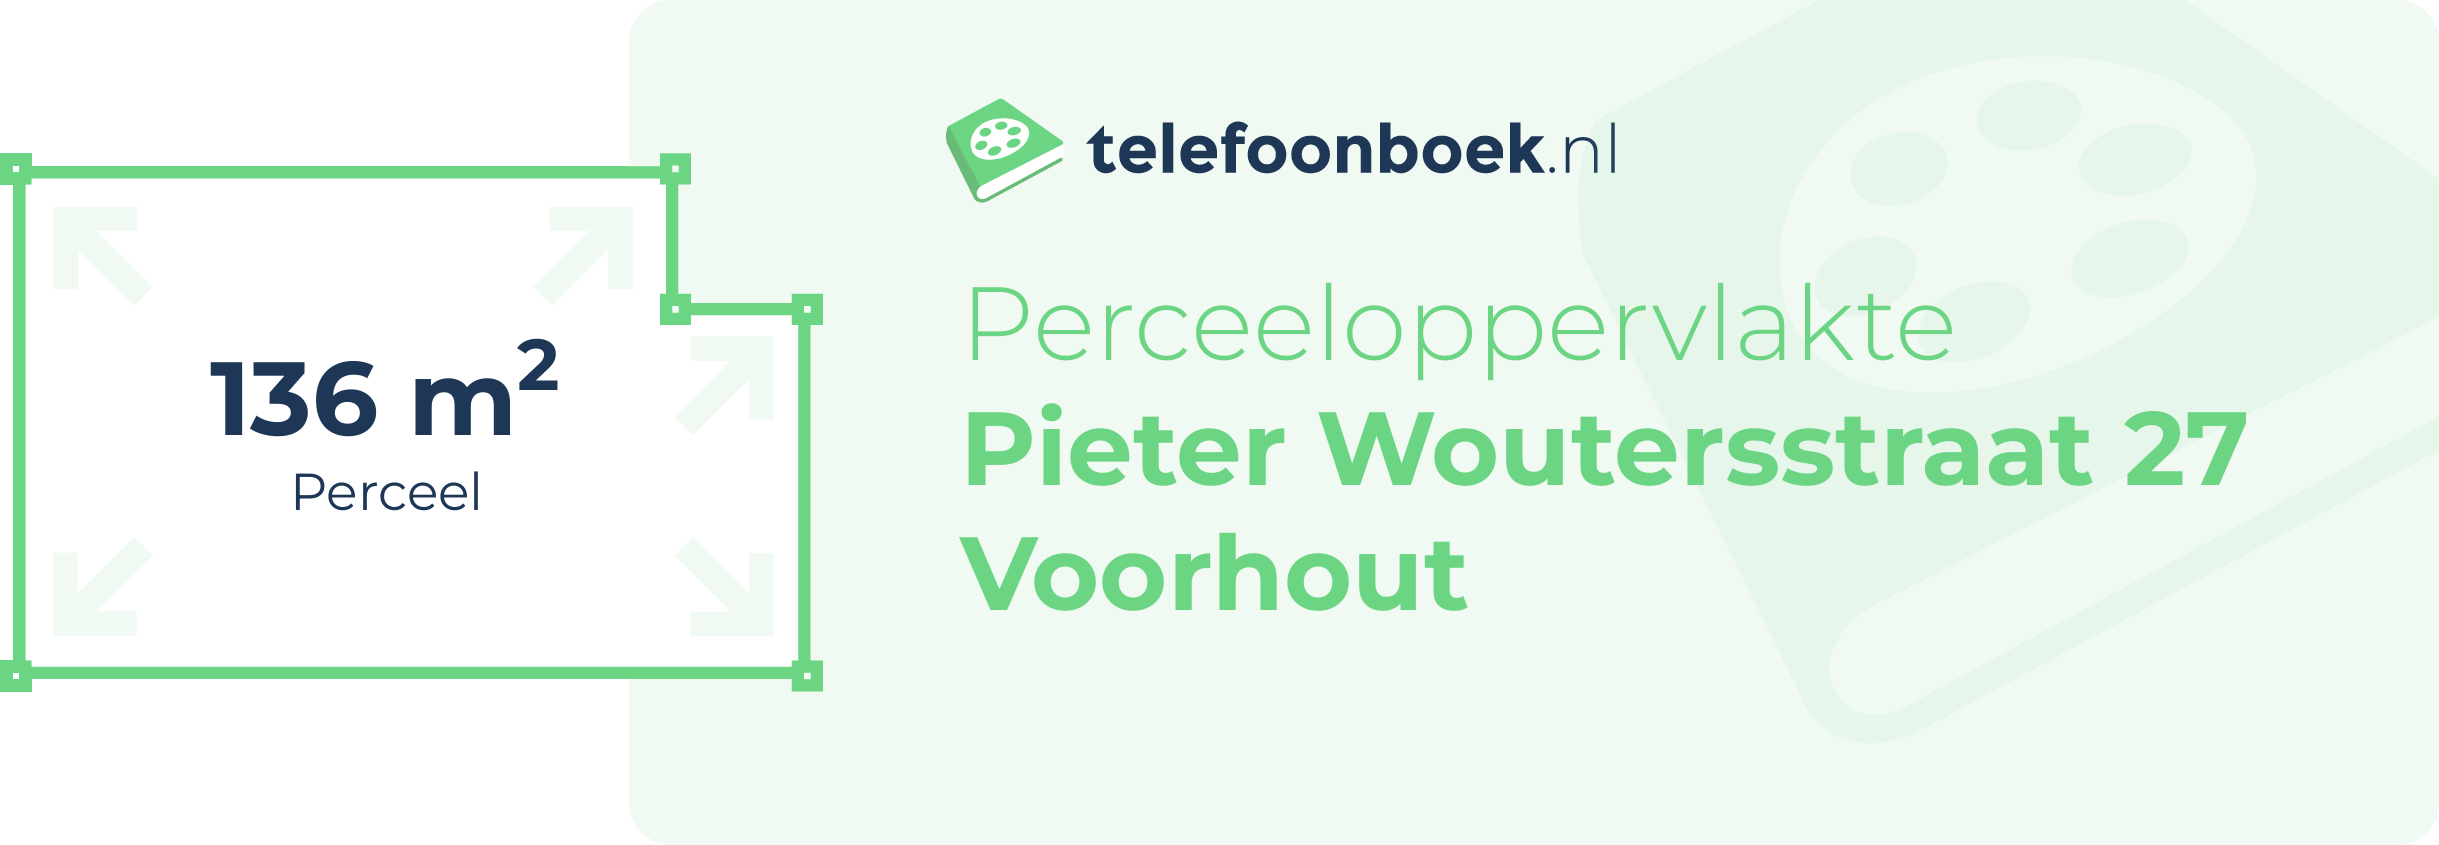 Perceeloppervlakte Pieter Woutersstraat 27 Voorhout